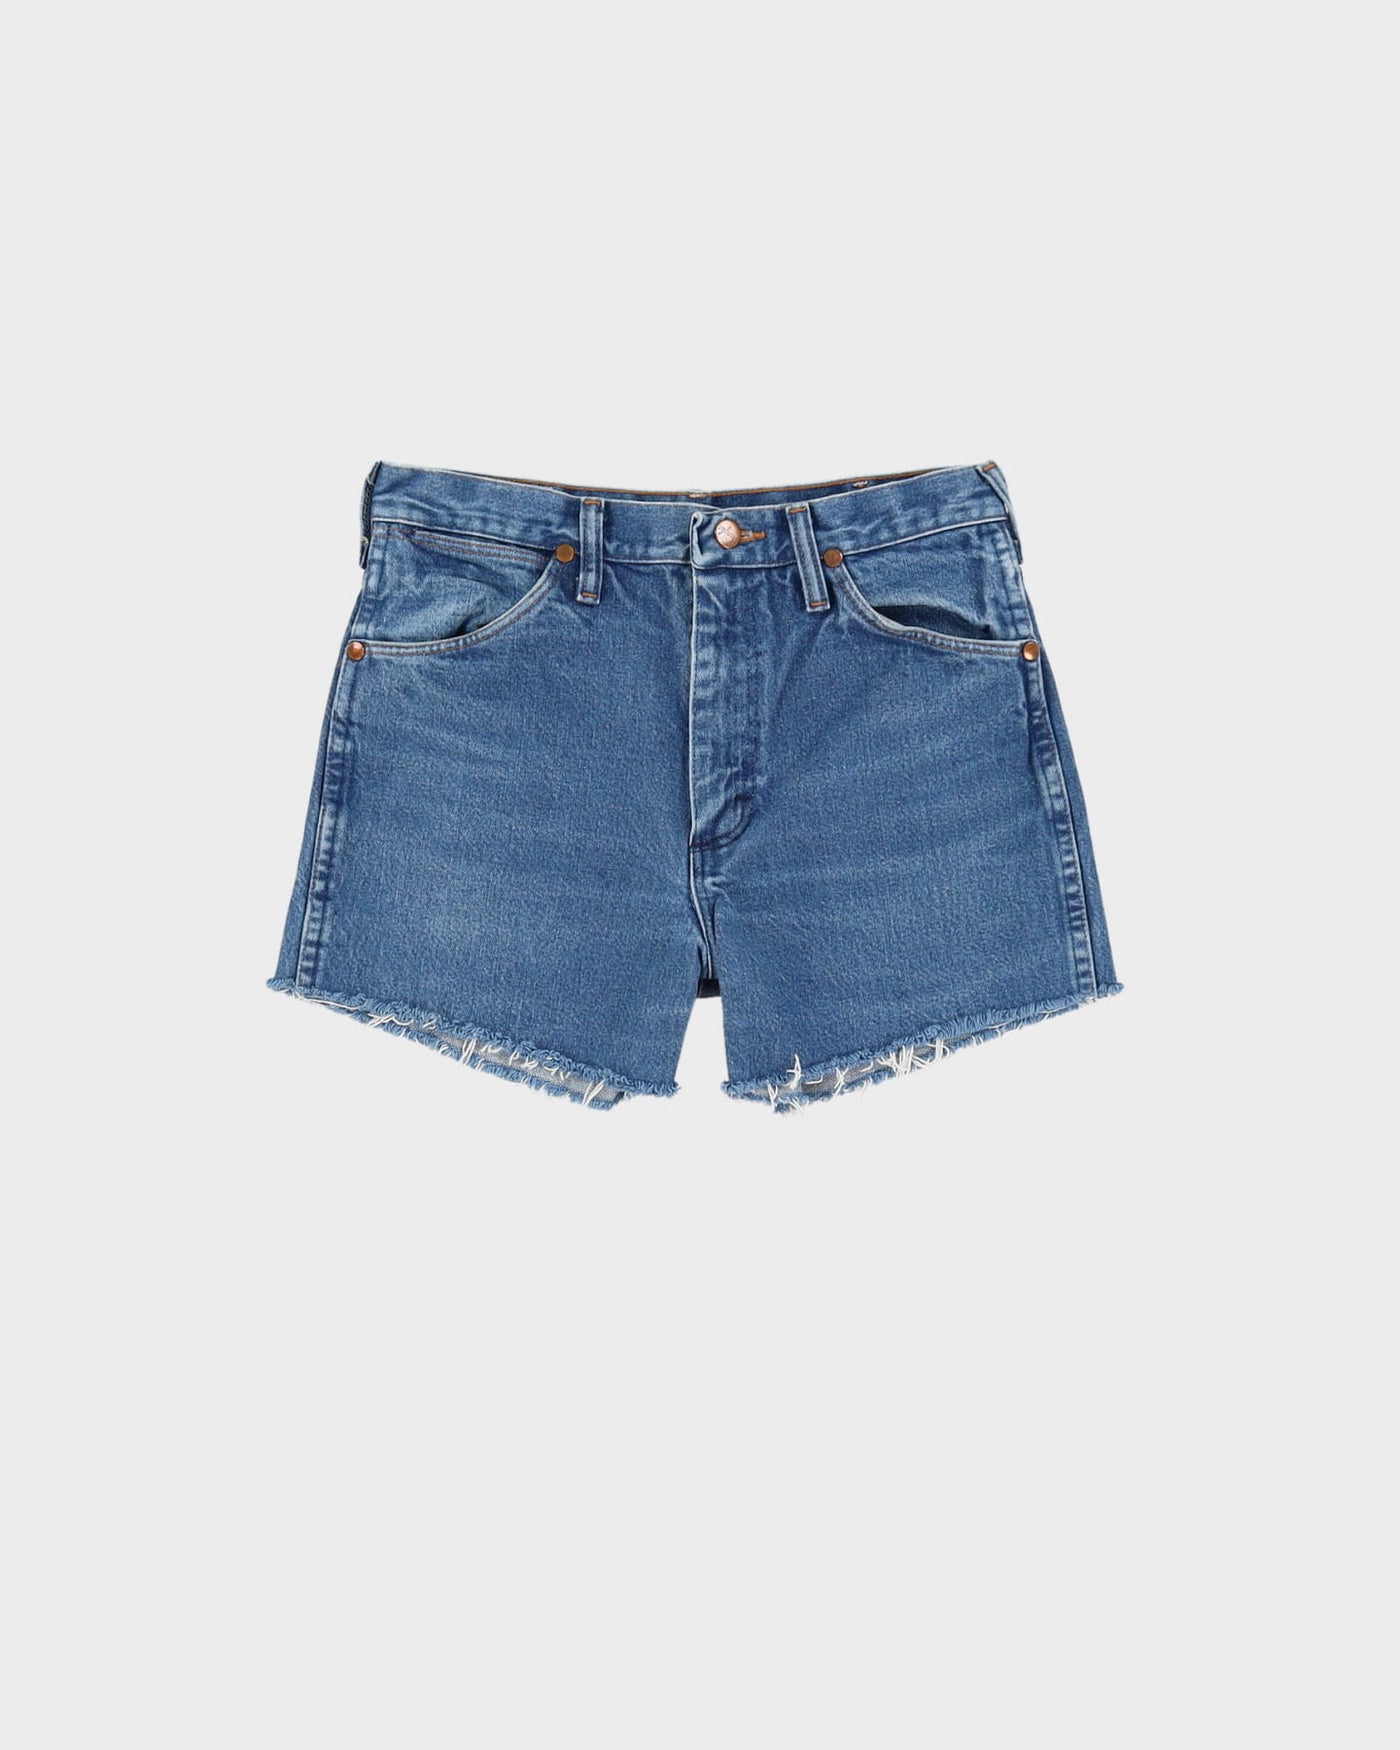 Vintage 90s Wrangler Blue Denim Shorts - W28